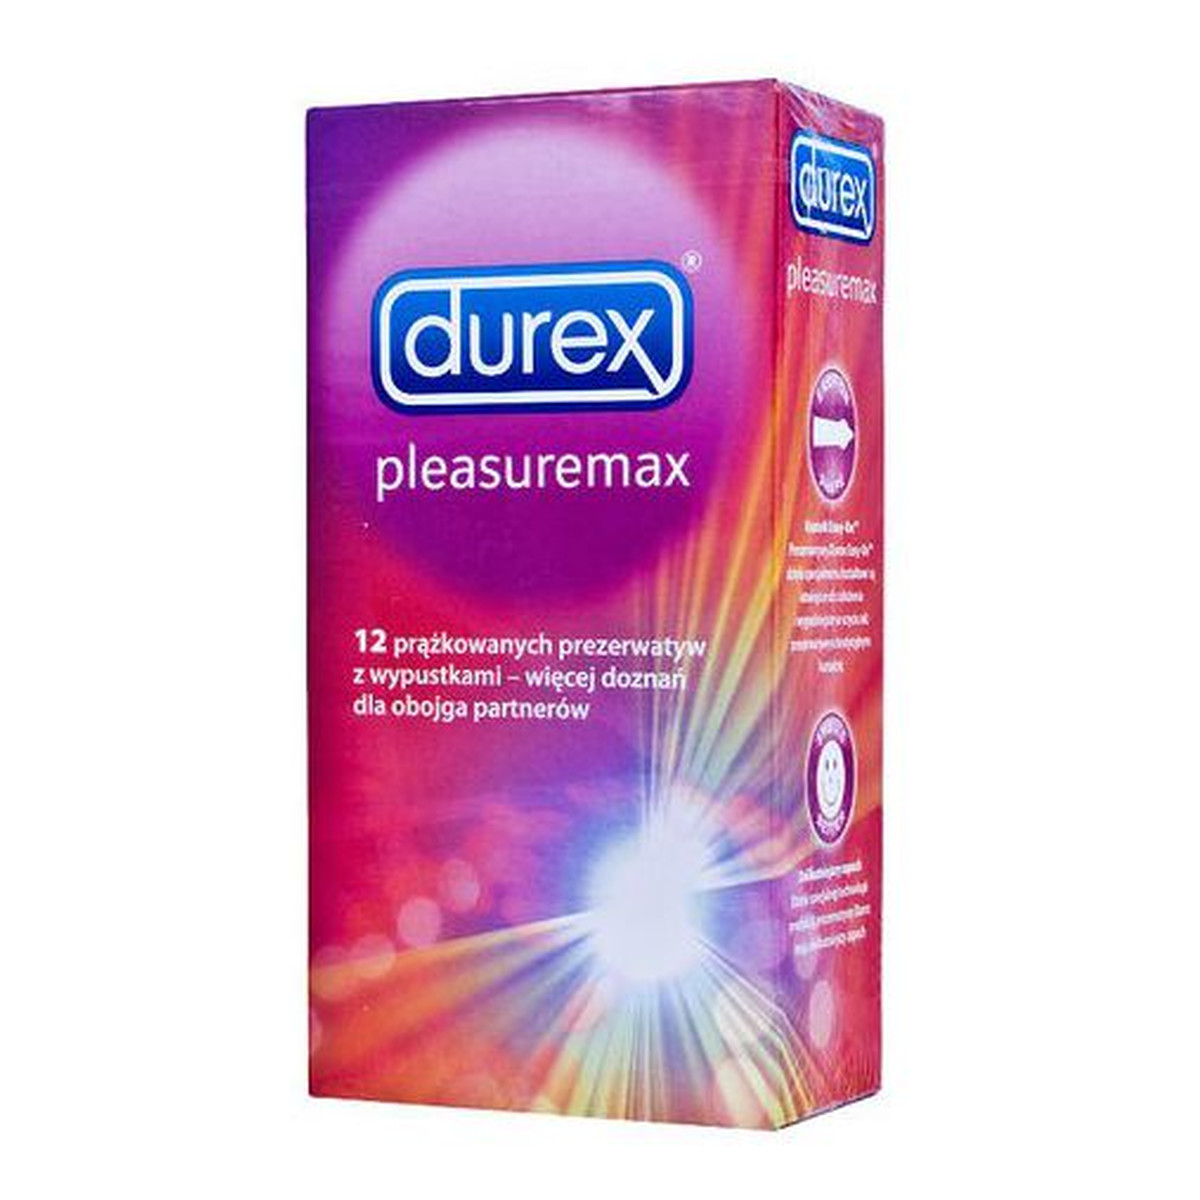 Durex Pleasuremax Prezerwatywy 12szt.